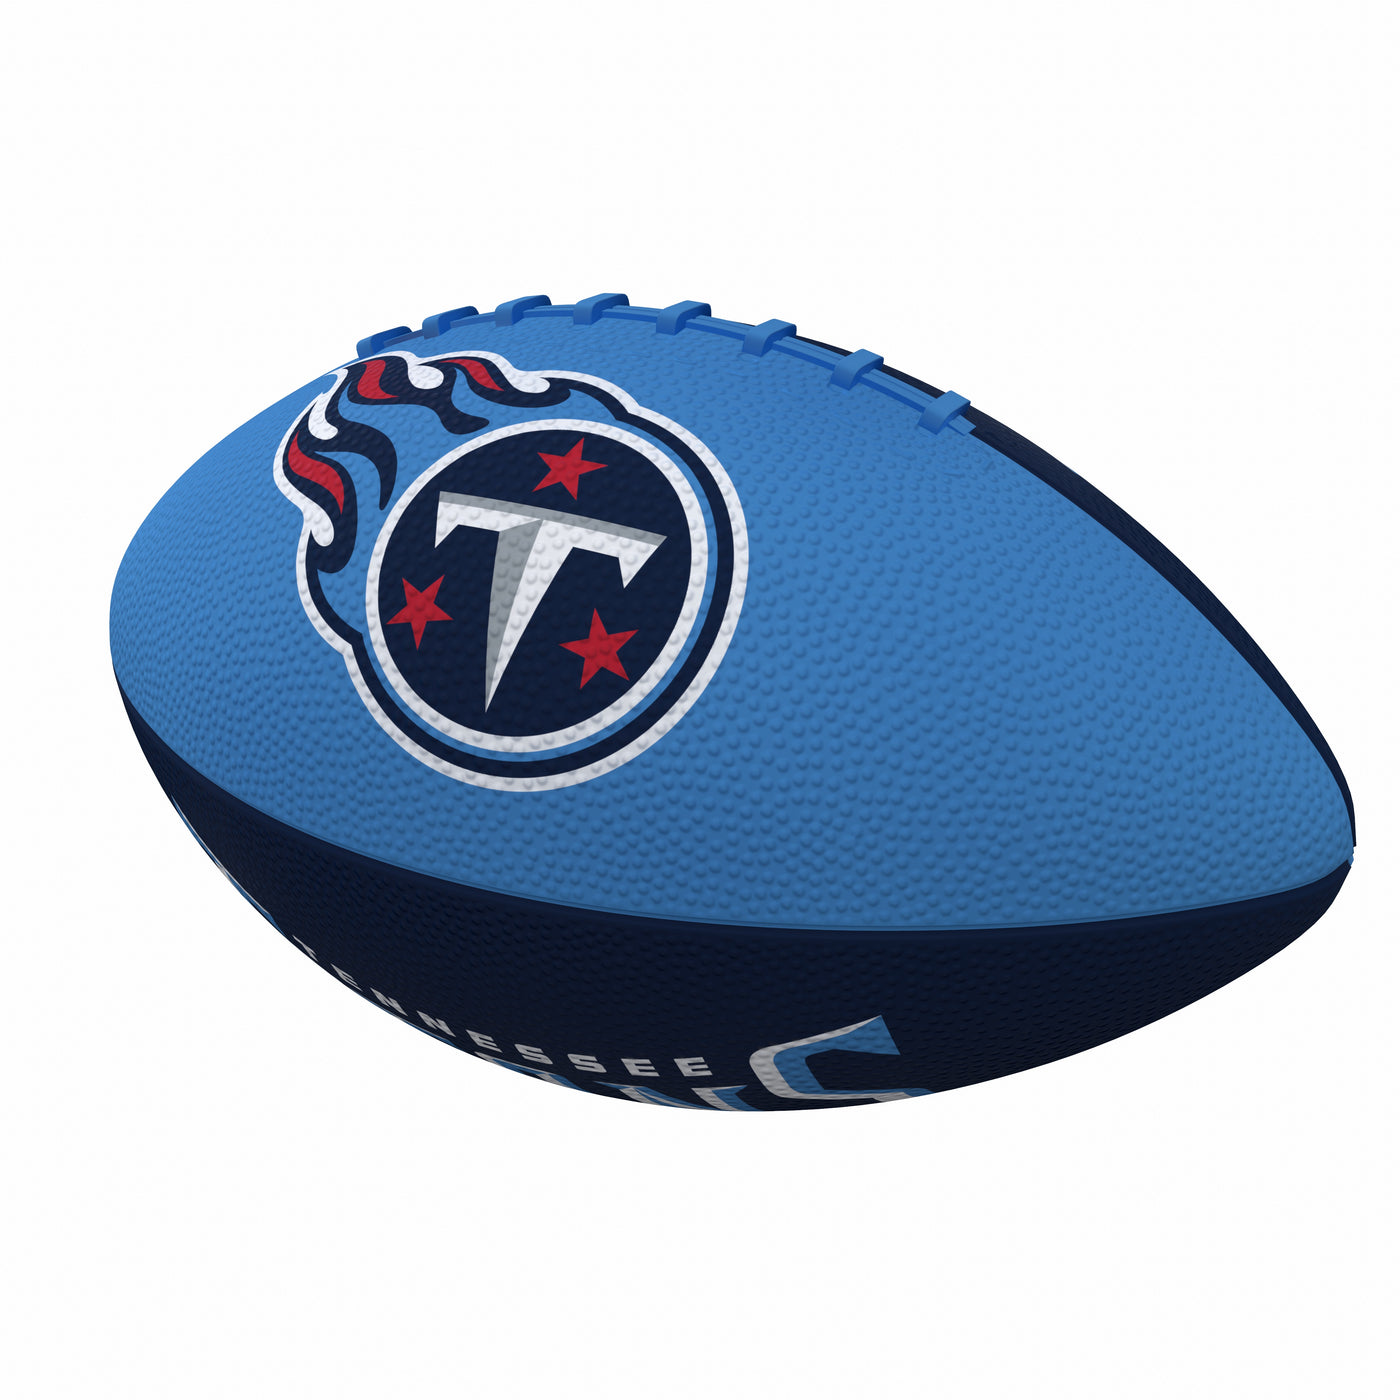 Tennessee Titans Pinwheel Logo Junior-Size Rubber Football